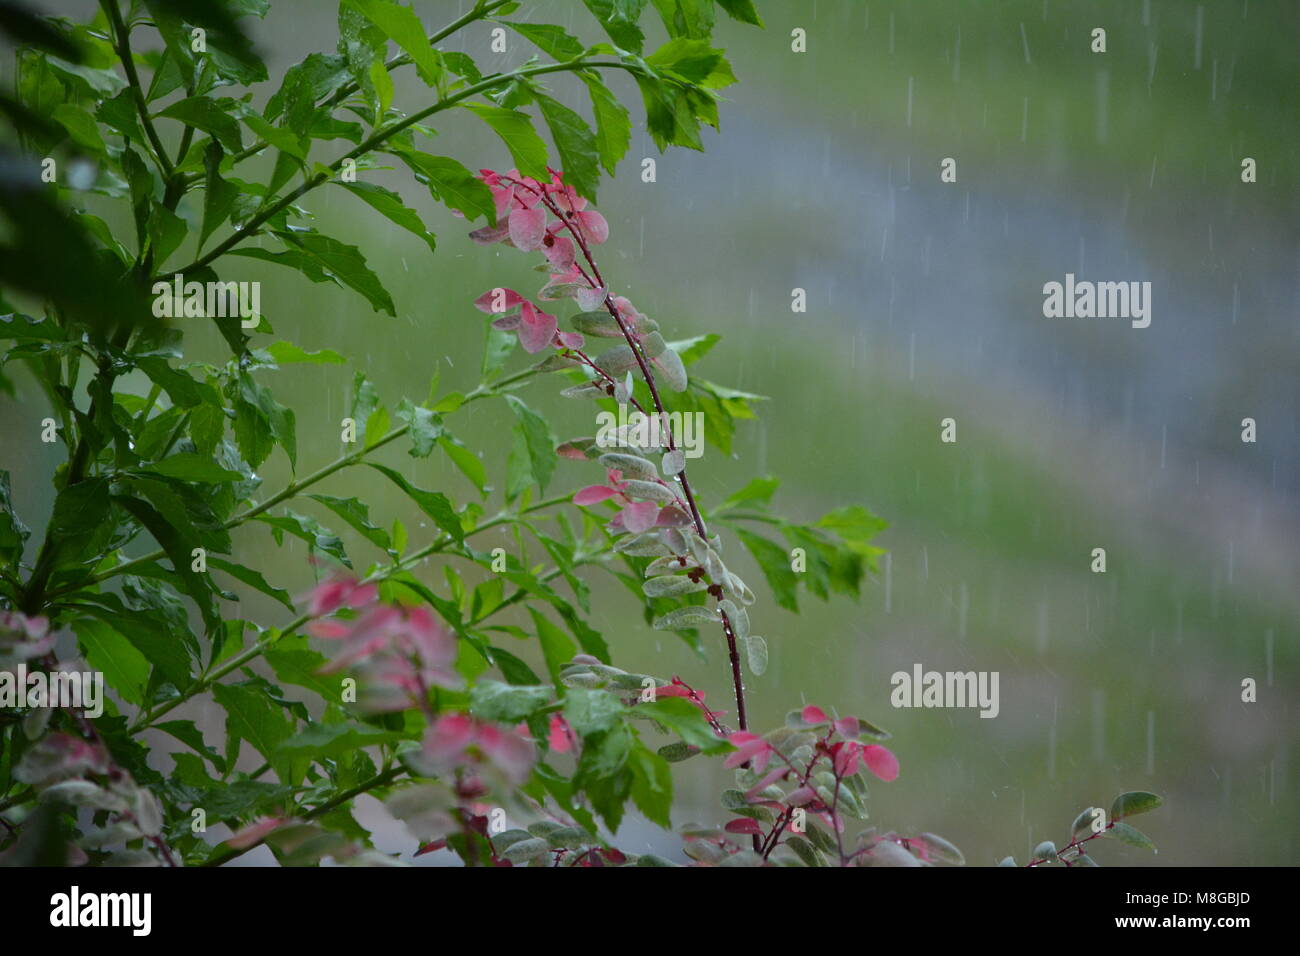 Wet, water, Raining in the garden. Rain drops falls on pink green leaves of a Snow bush and Geisha Girl plant watering an Australian Coastal Garden Stock Photo